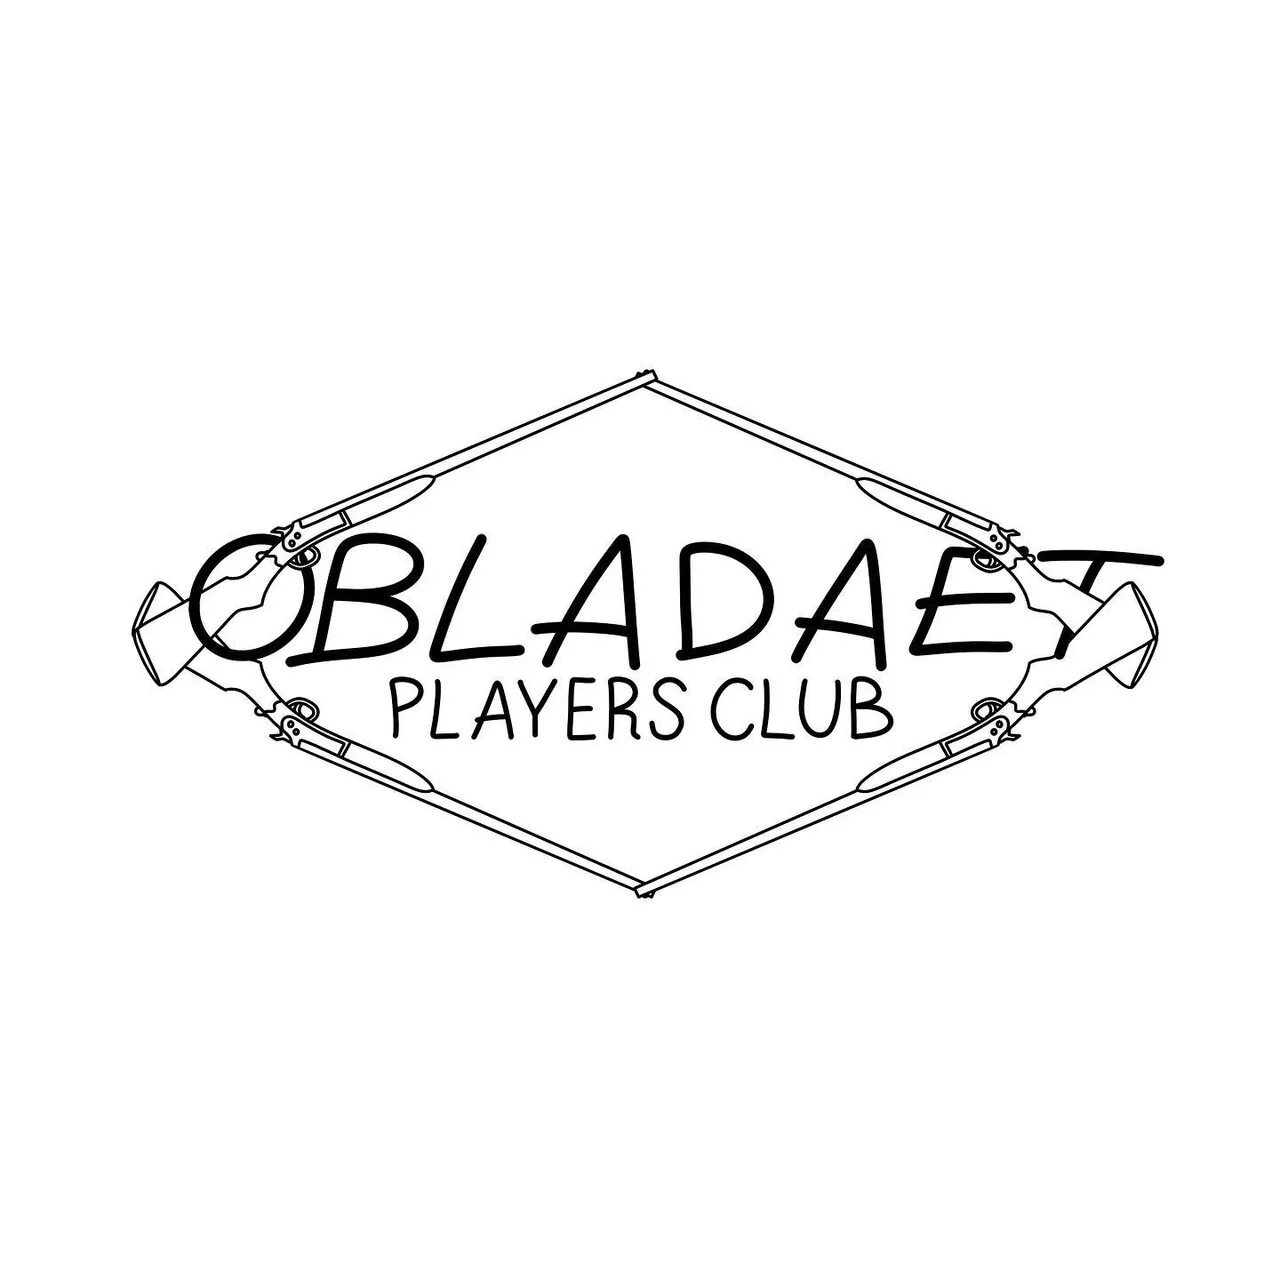 Players club 2. Players Club. Players Club логотип. Players Club наклейка. Обложка альбома Players Club.